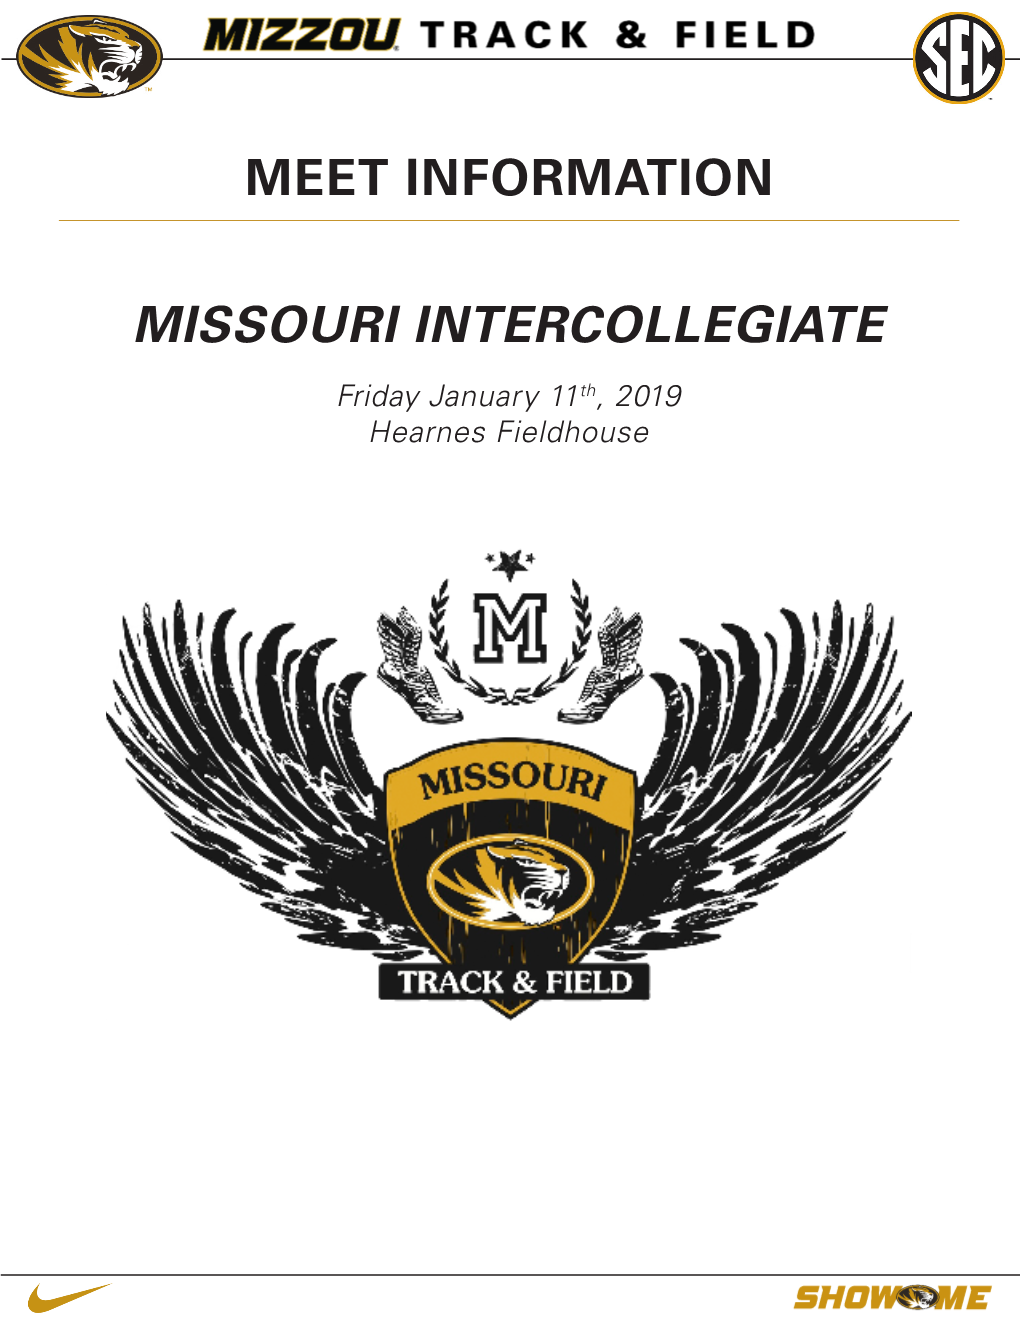 Missouri Intercollegiate Meet Information